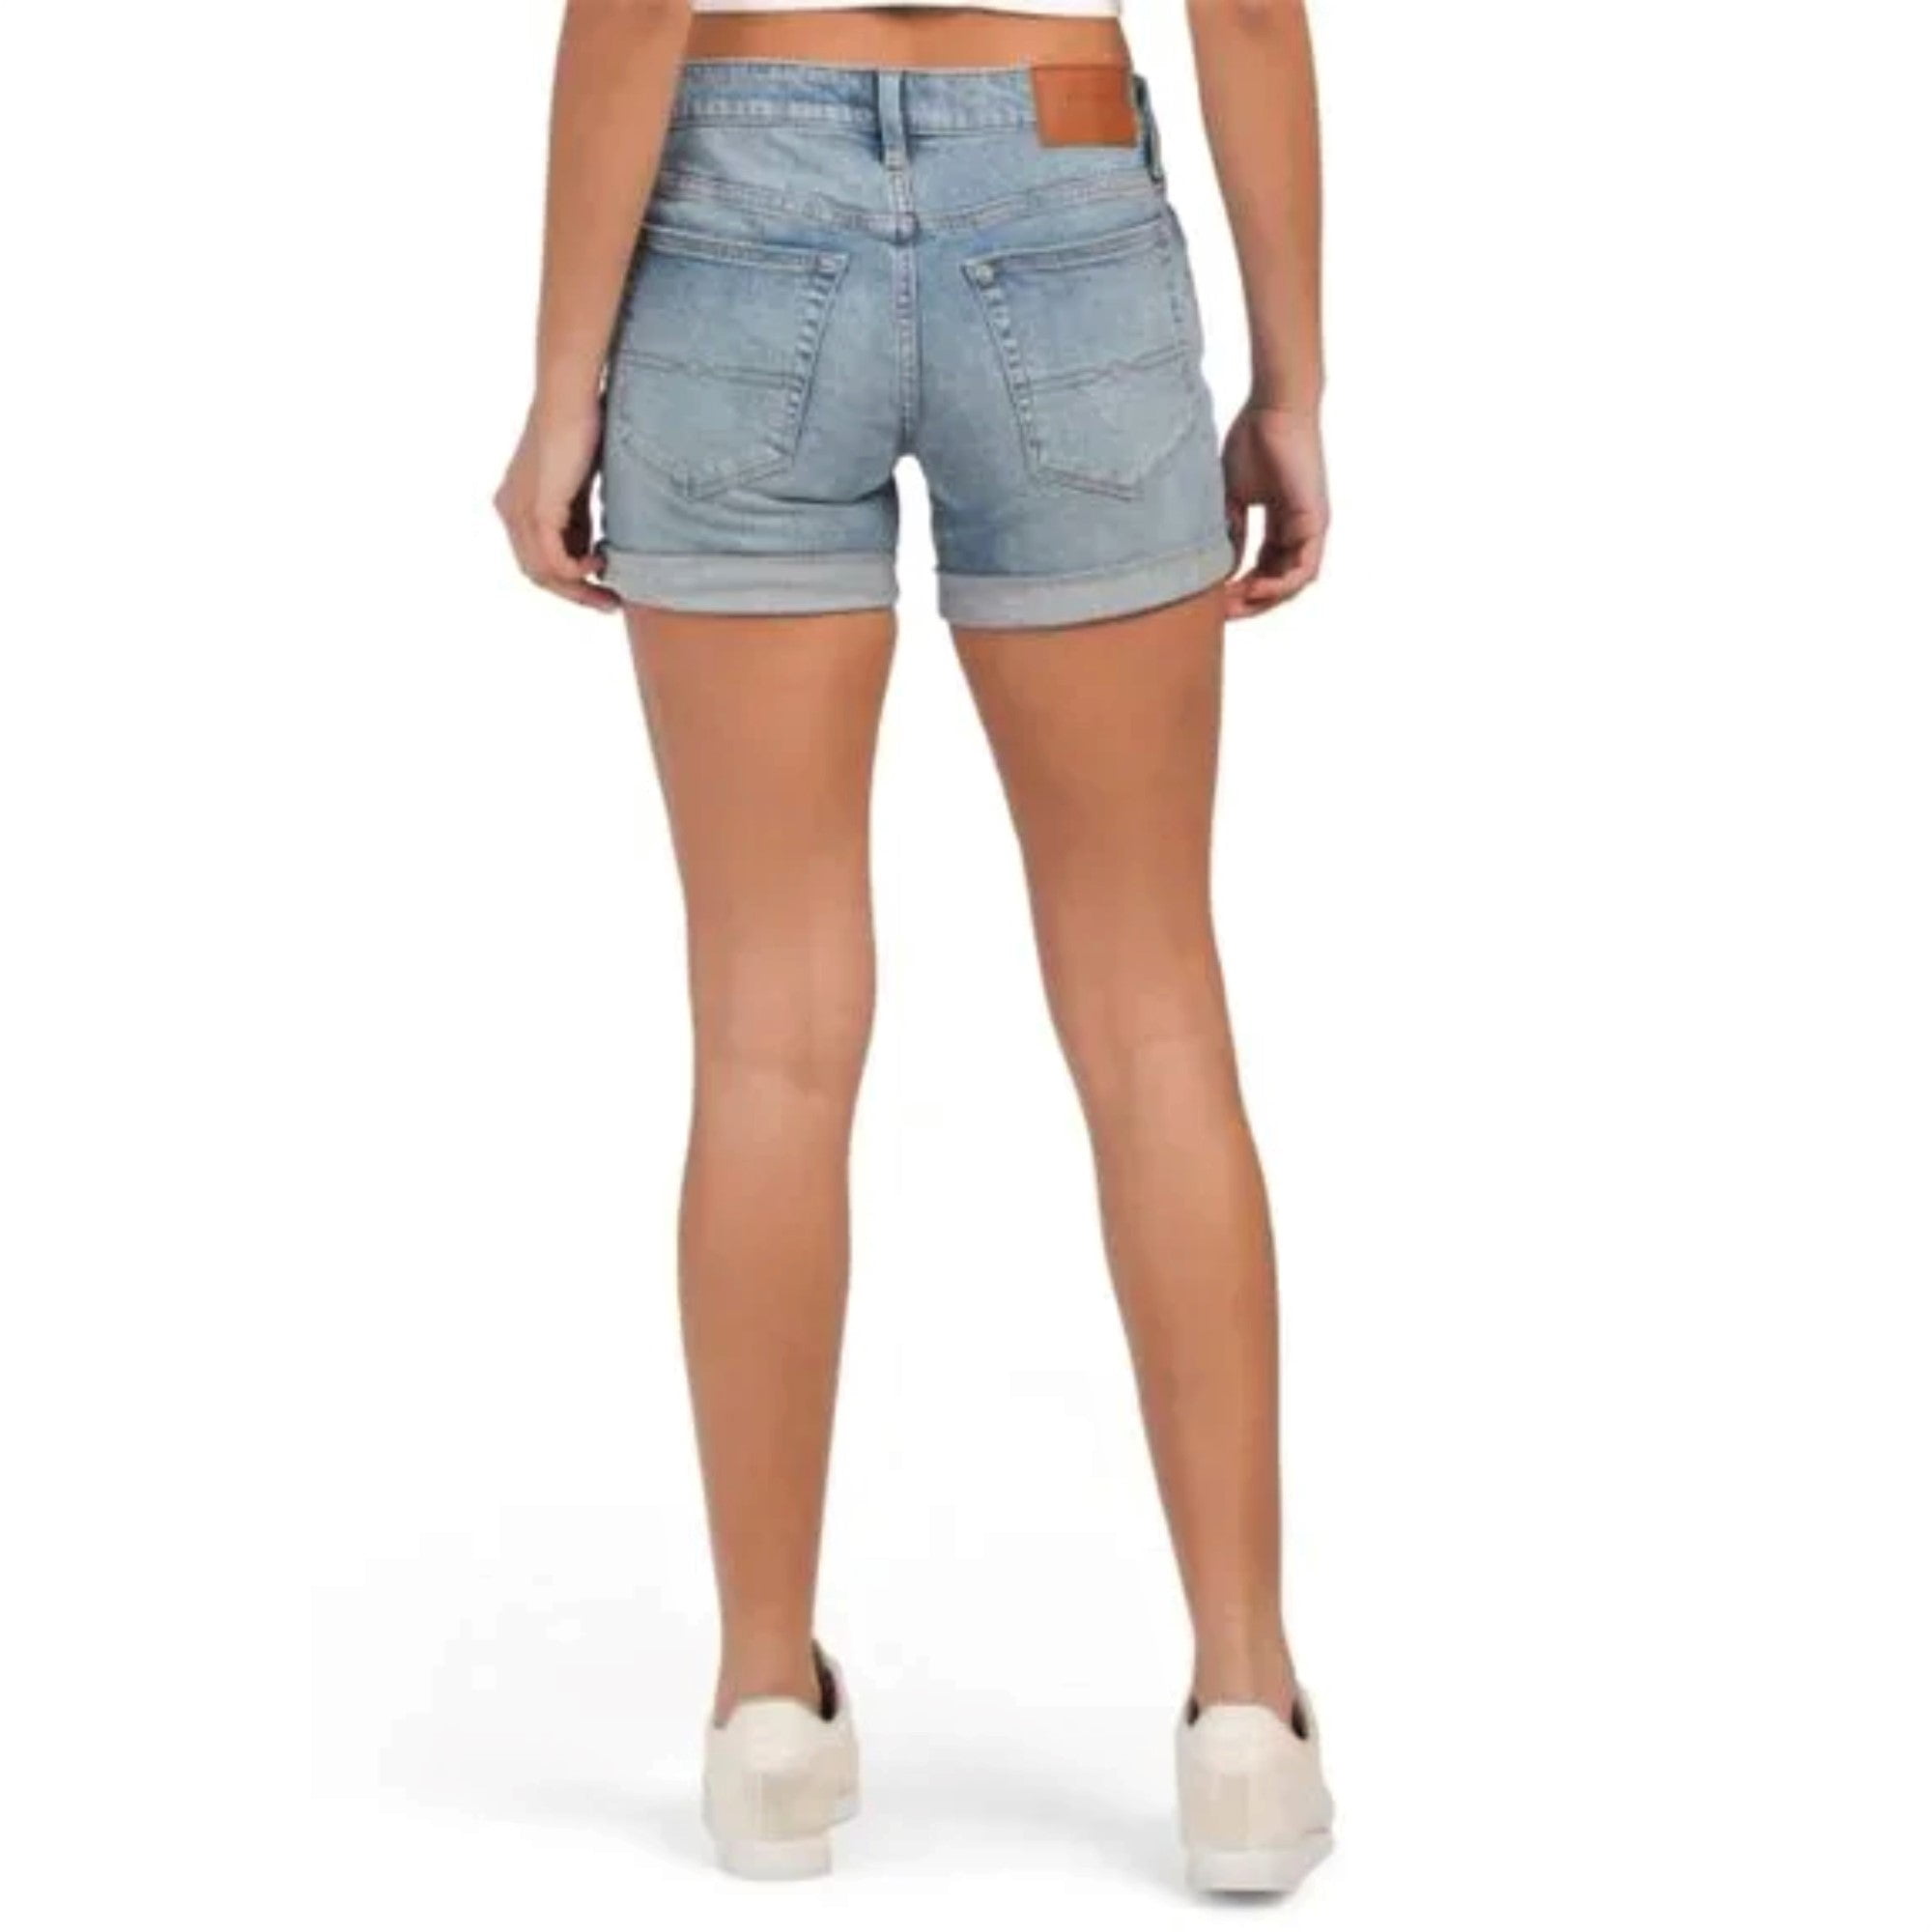 NWT Lucky Brand Women's Denim Shorts The Roll Up Size 2/26 $69.50 Medium  Wash